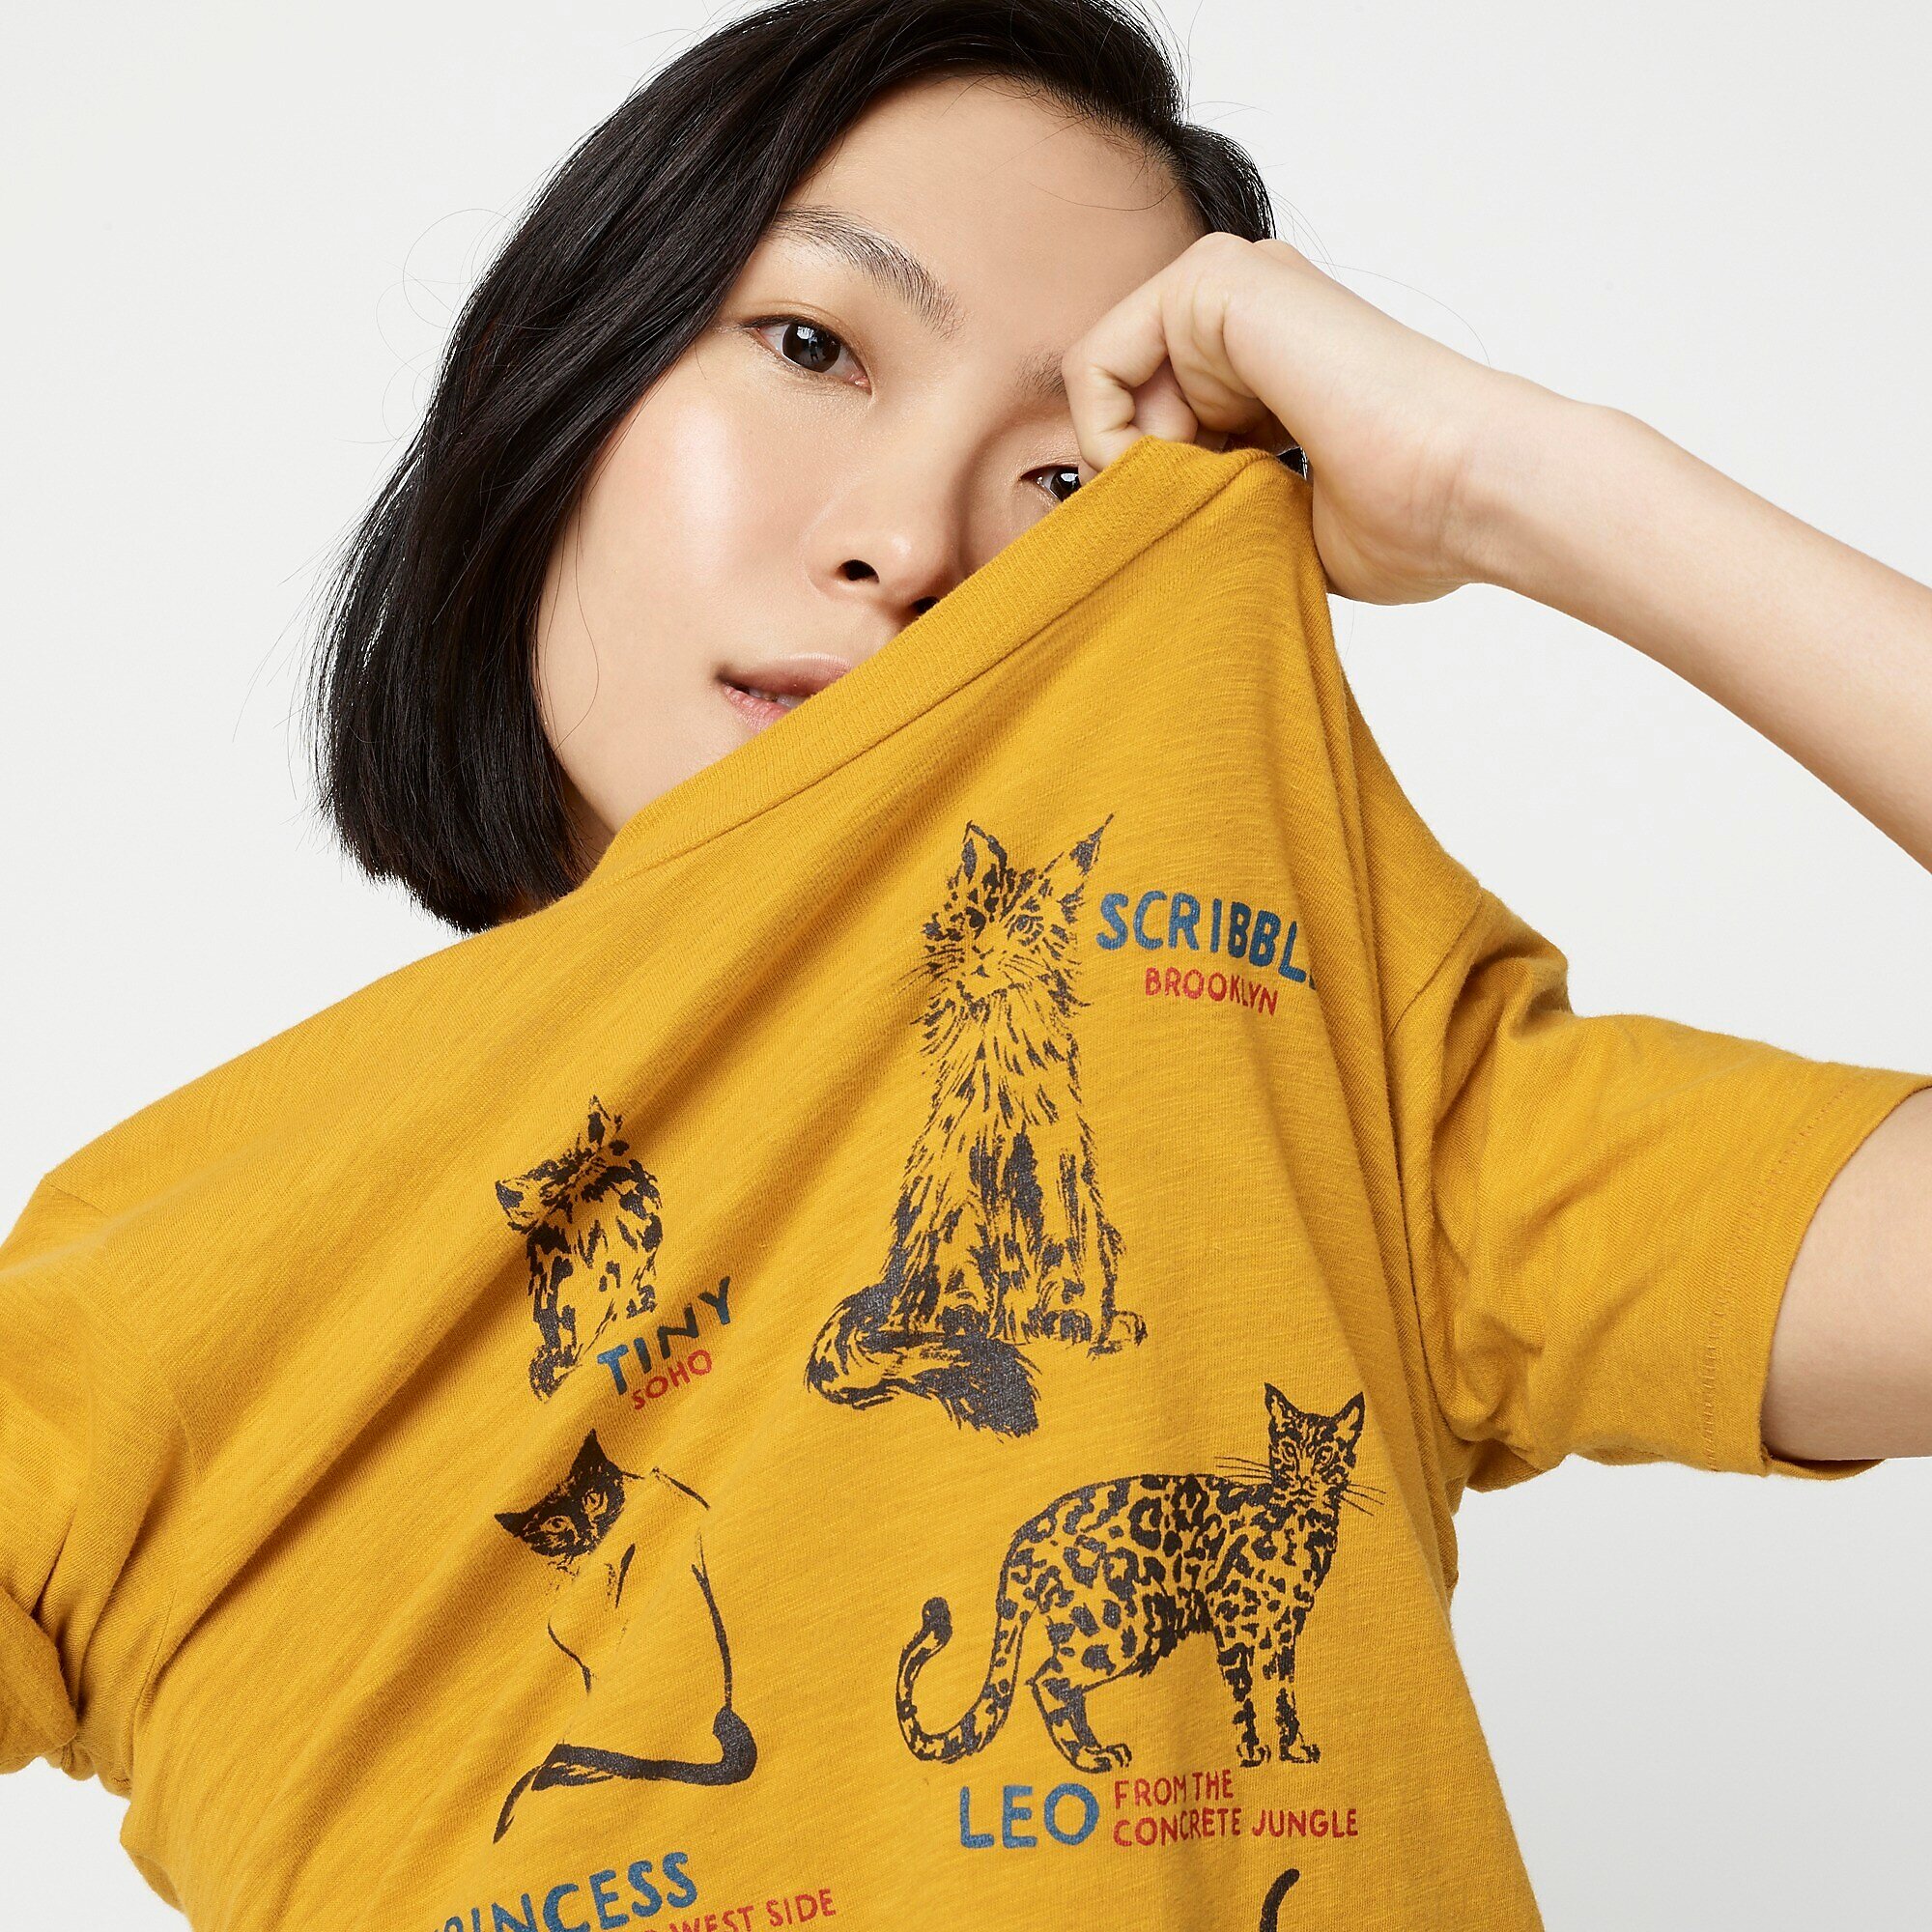 Camilla Atkins, CATKINS DESIGN for J. Crew, Summer 2019 Cats of New York graphic design, screen printed tee shirt.jpeg